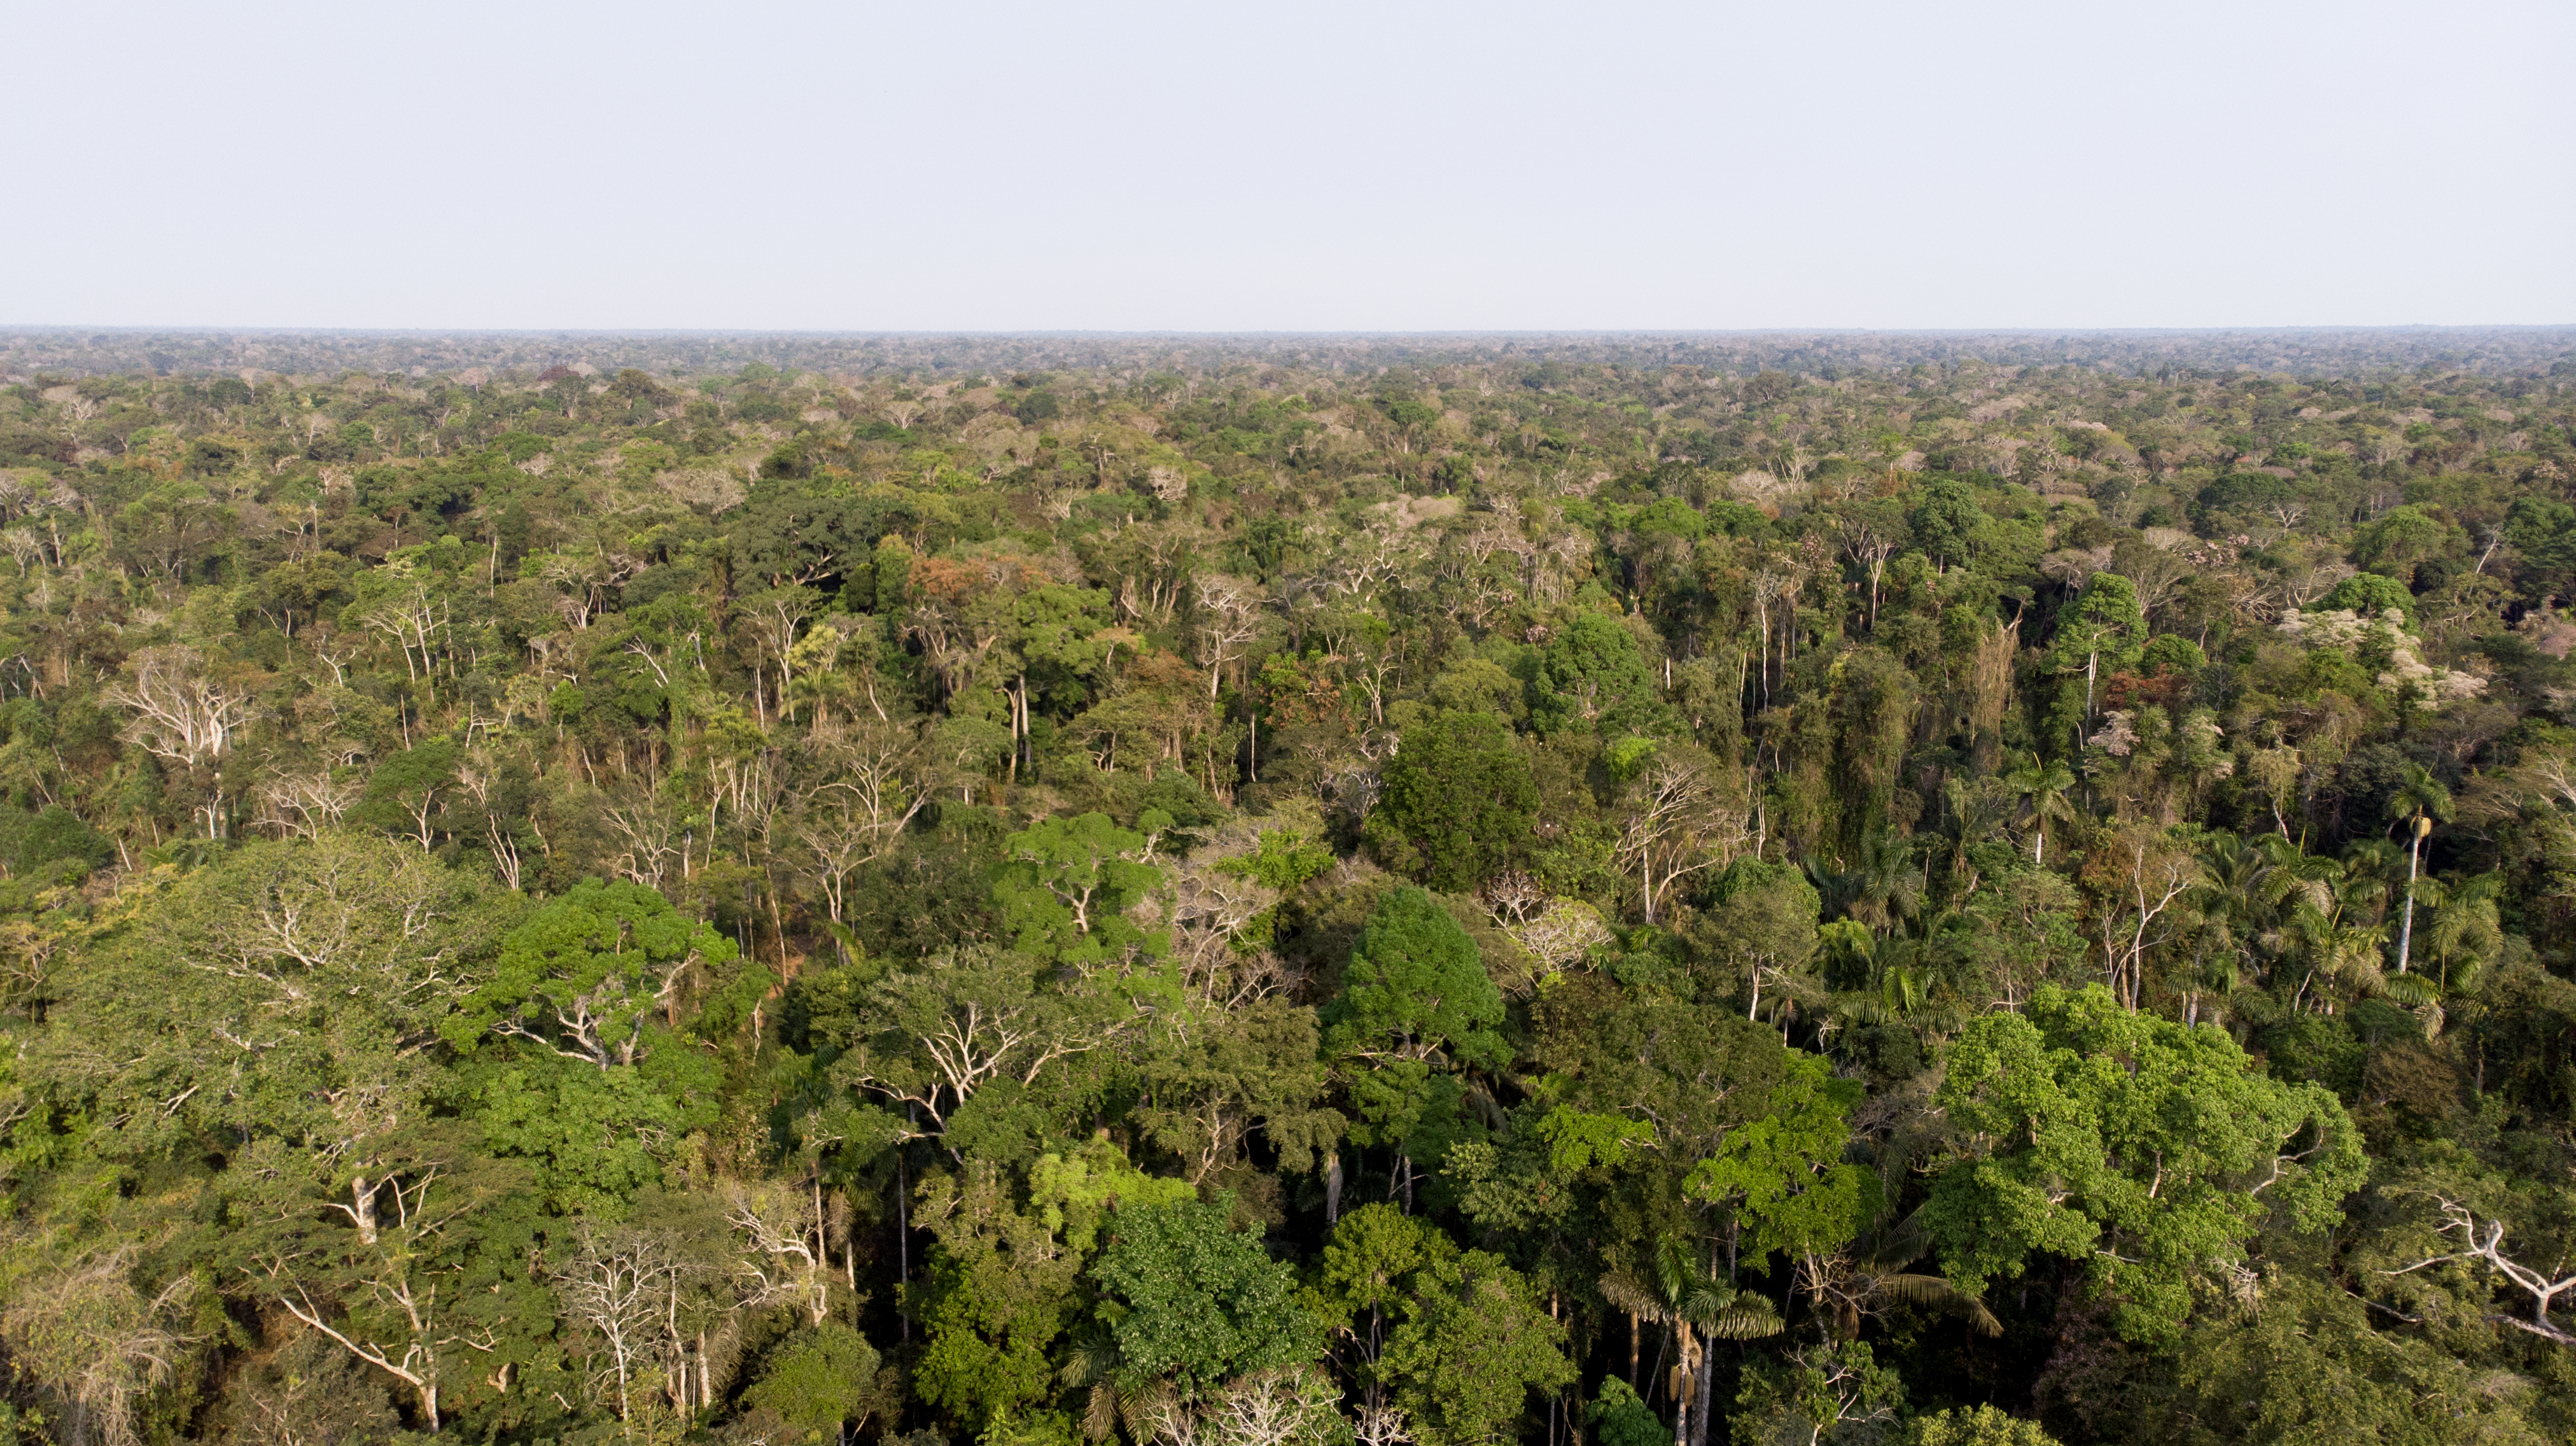 drone image of Madre de Dios rainforest in Peru